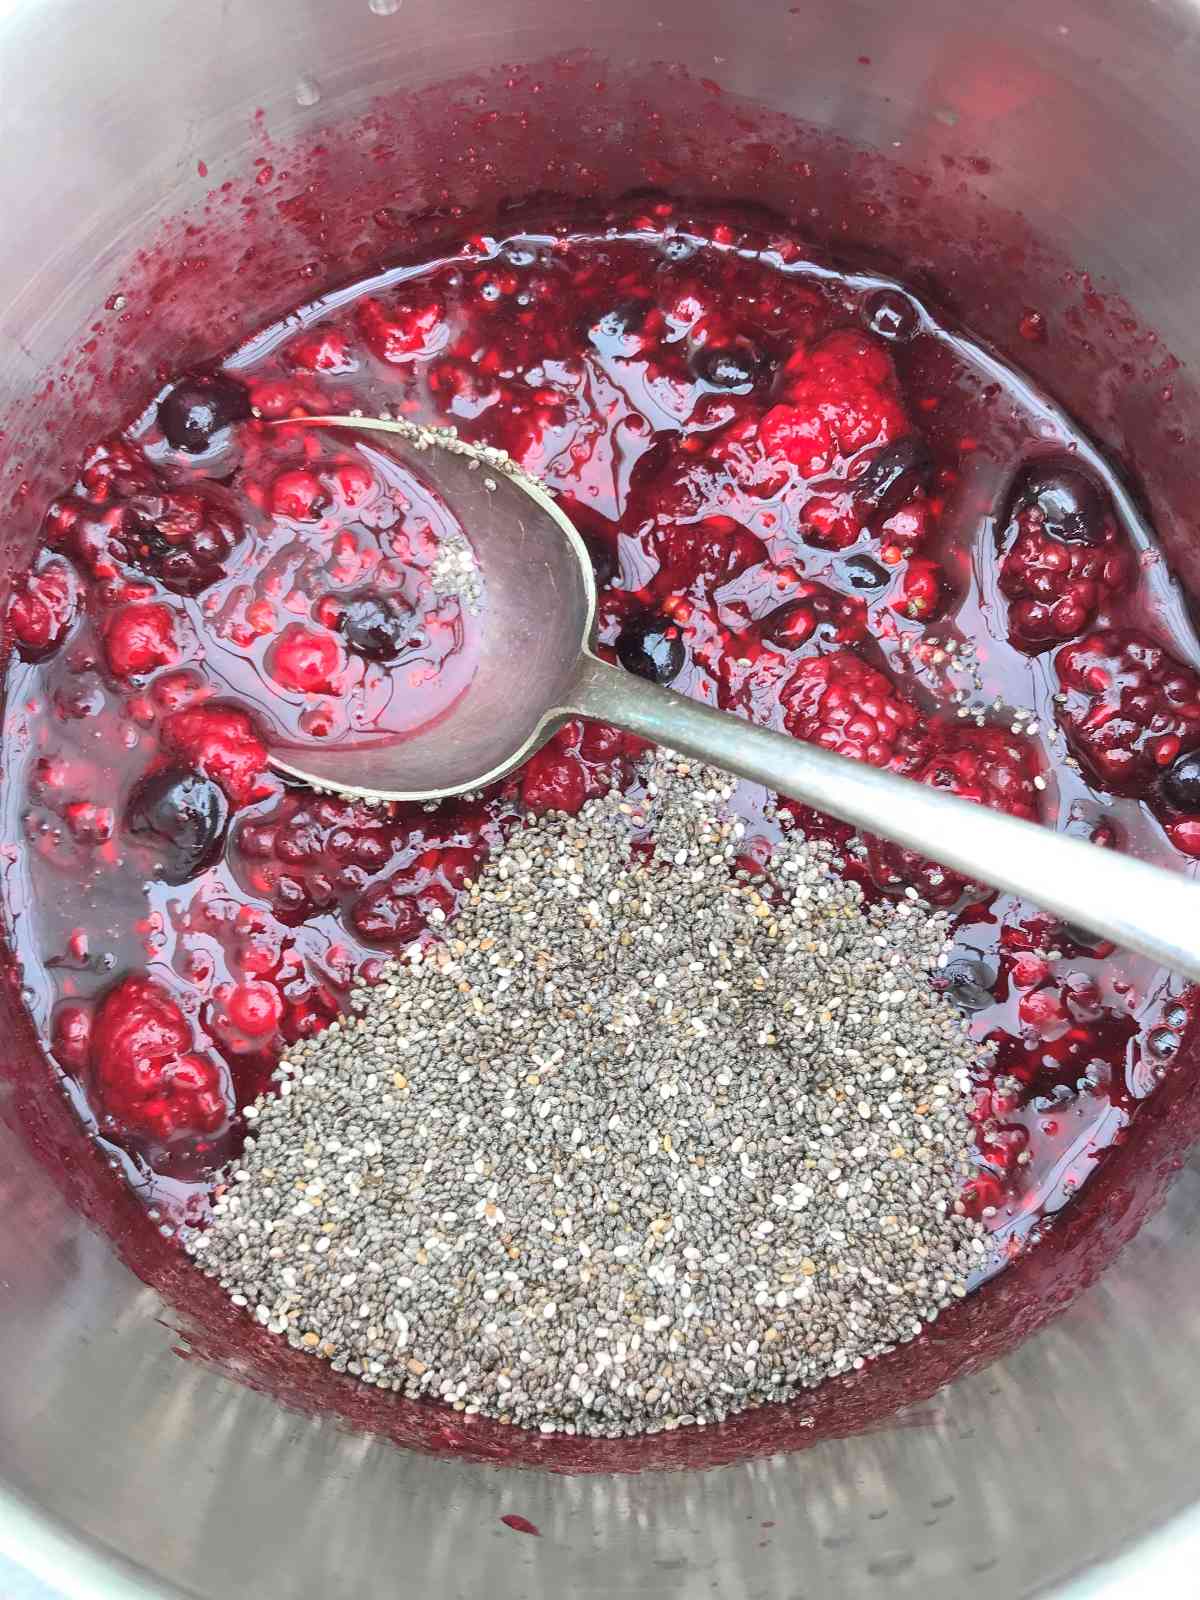 Adding chia seed to quick homemade jam.